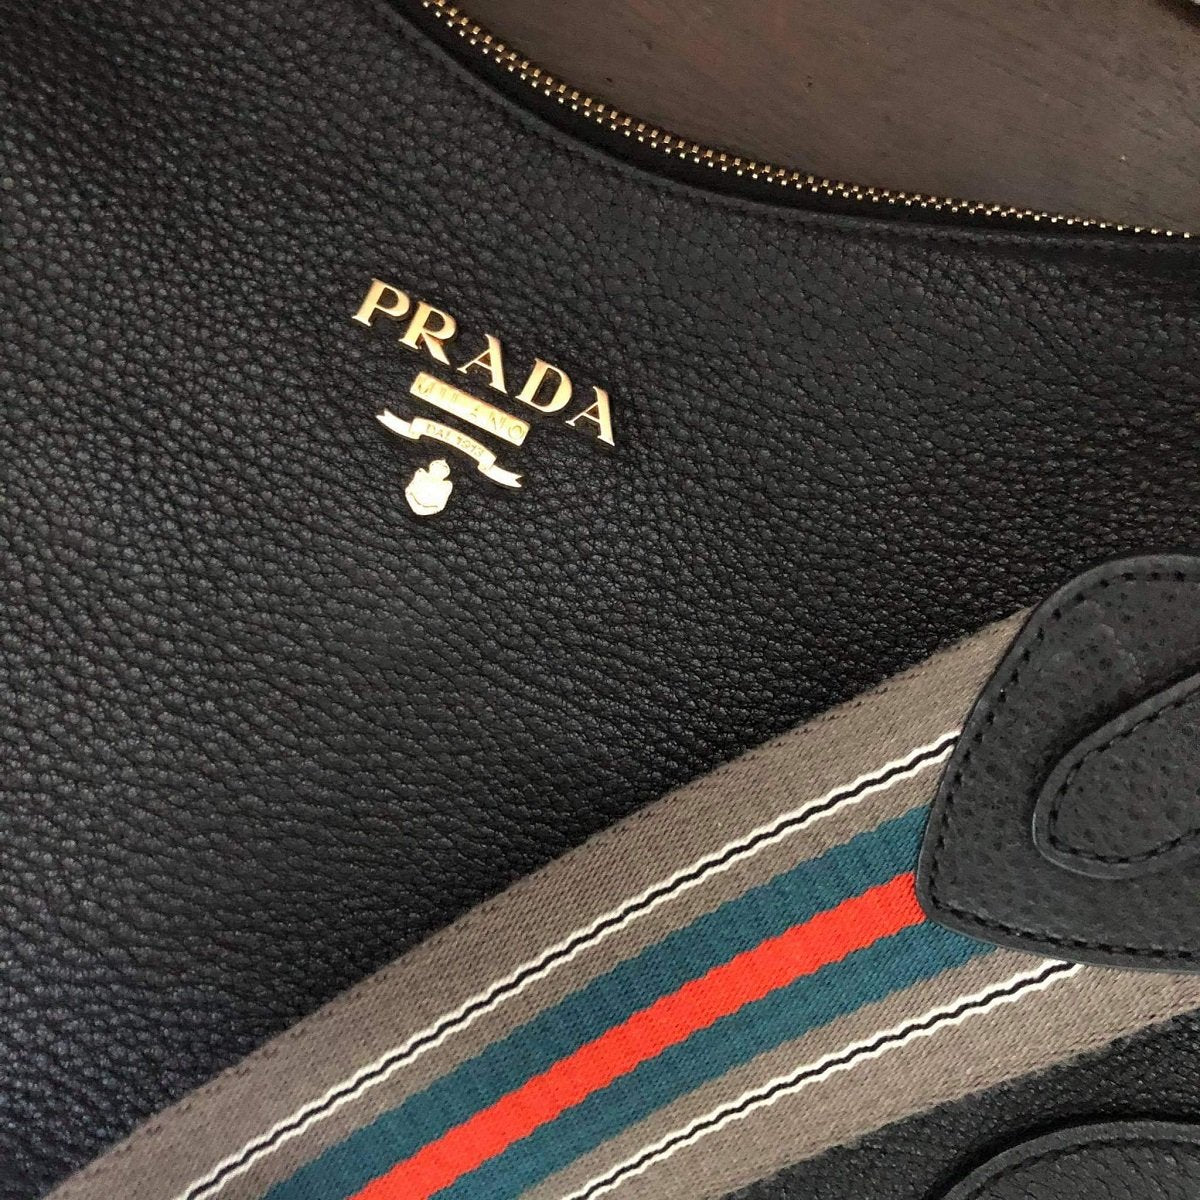 New Prada Black Vitello Phenix Leather Shoulder Camera Bag 1BH103 